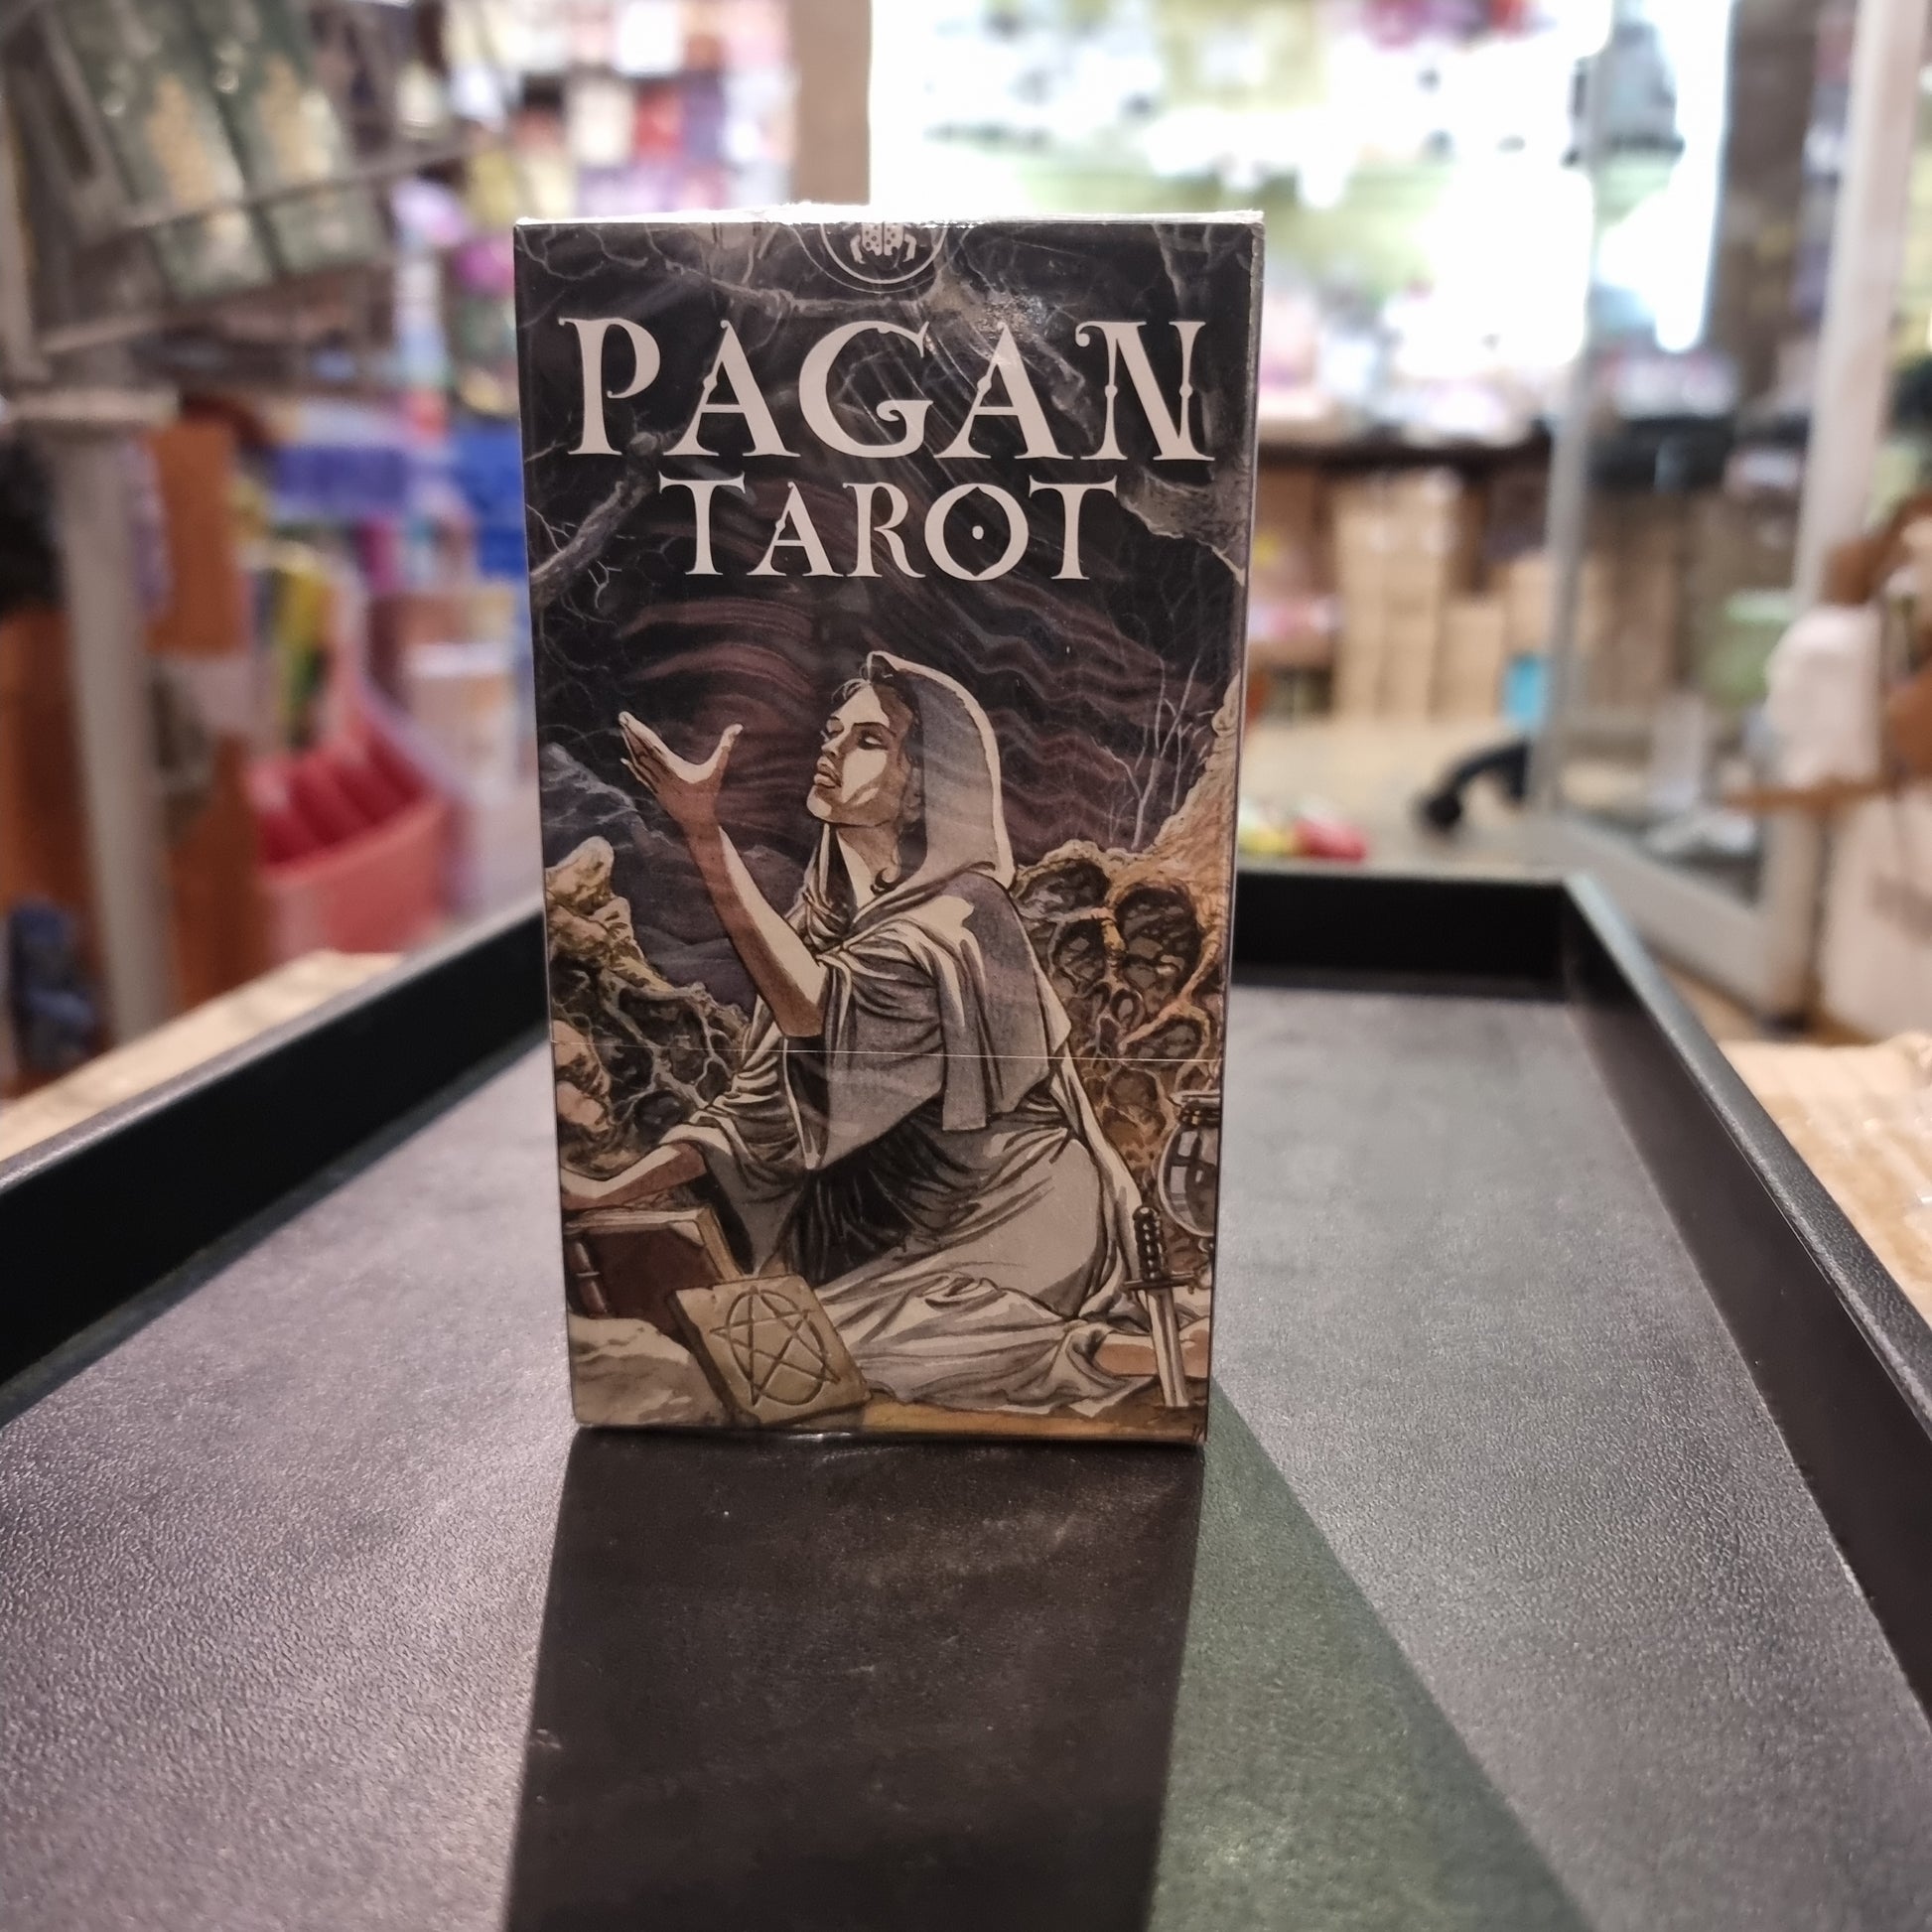 Pagan tarot deck - Rivendell Shop